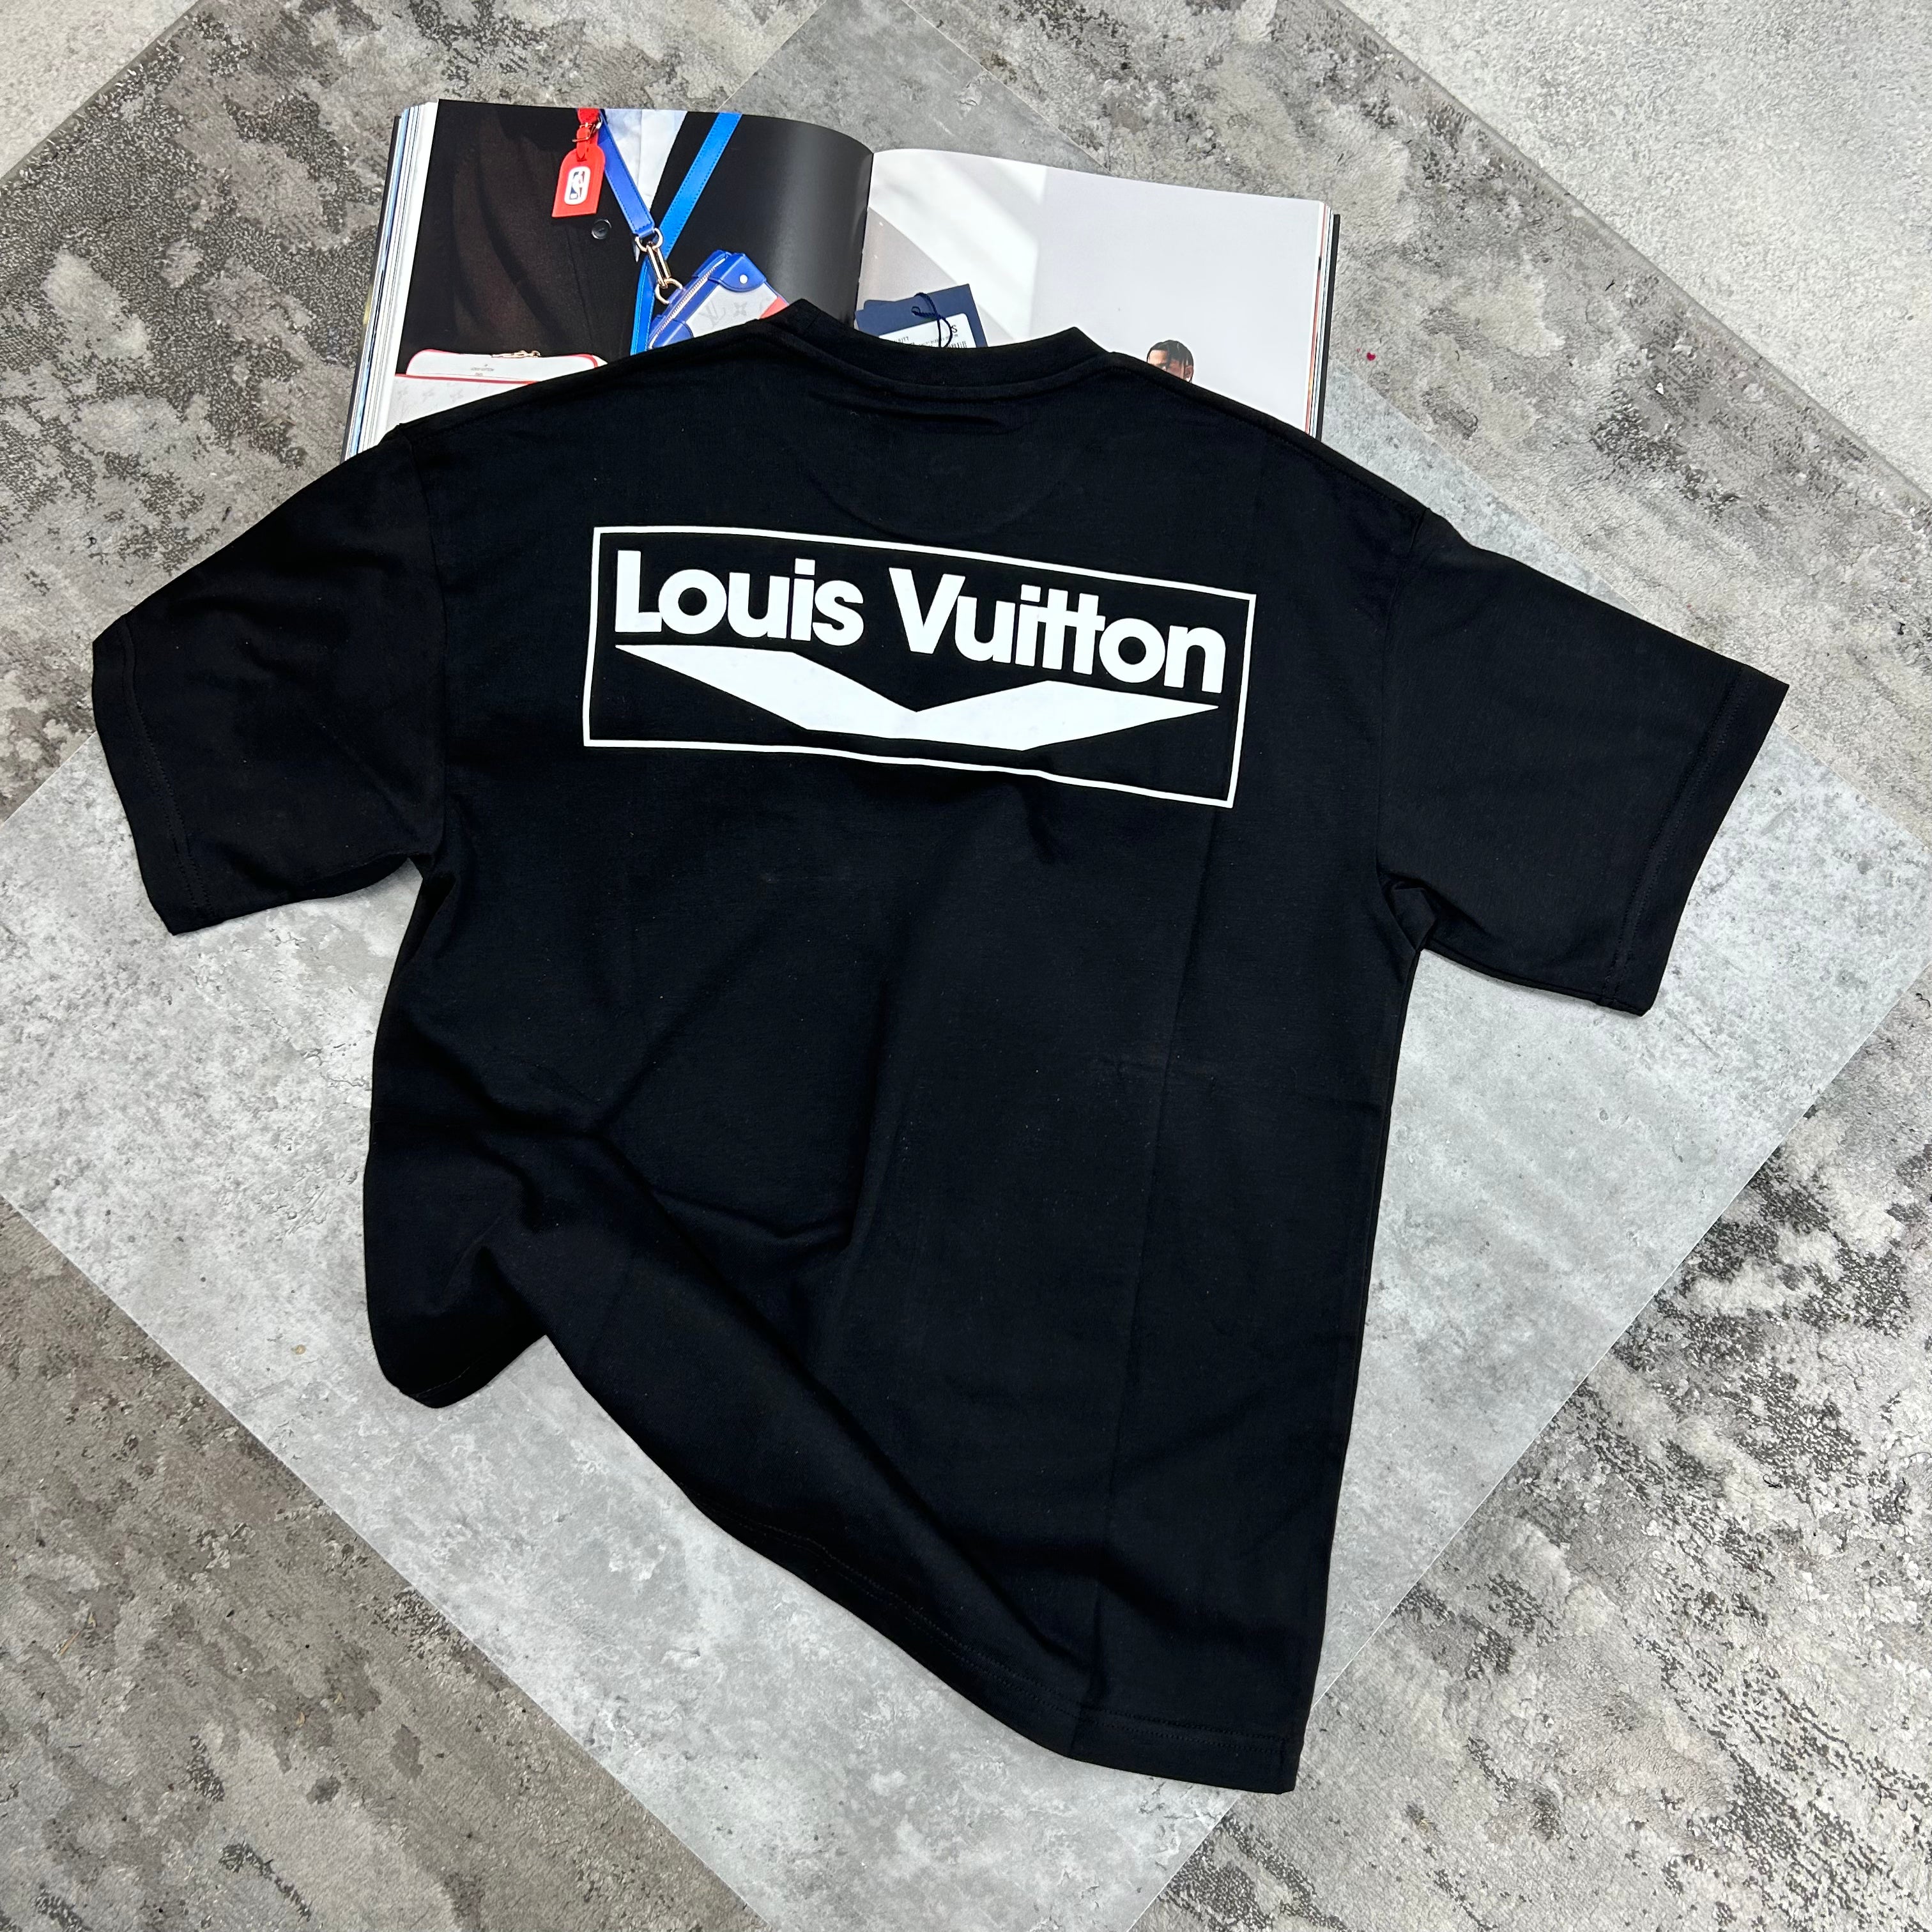 LOUIS VUITTON - LV 4 LOGO T-SHIRT - BLACK